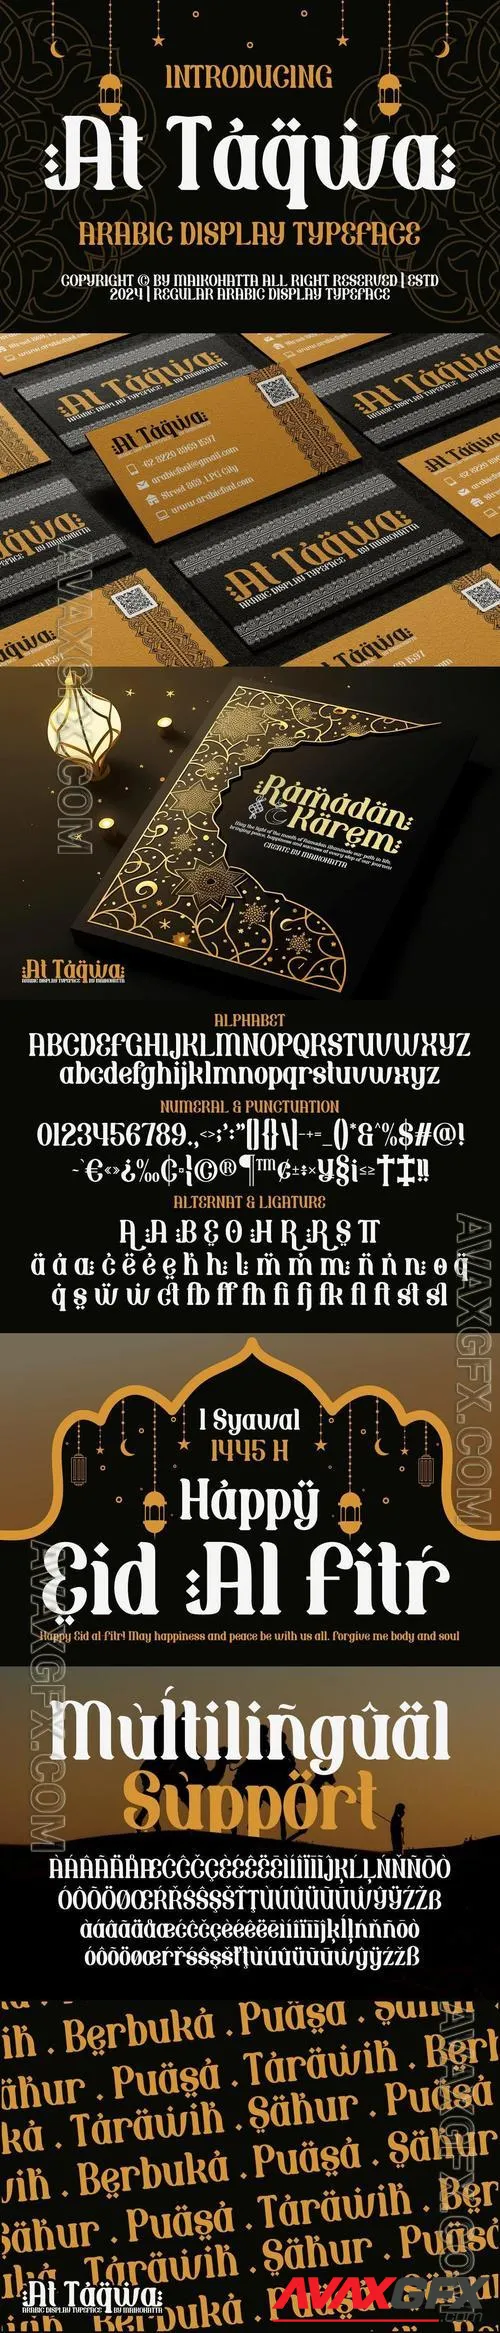 At Taqwa - Arabic Display Typeface